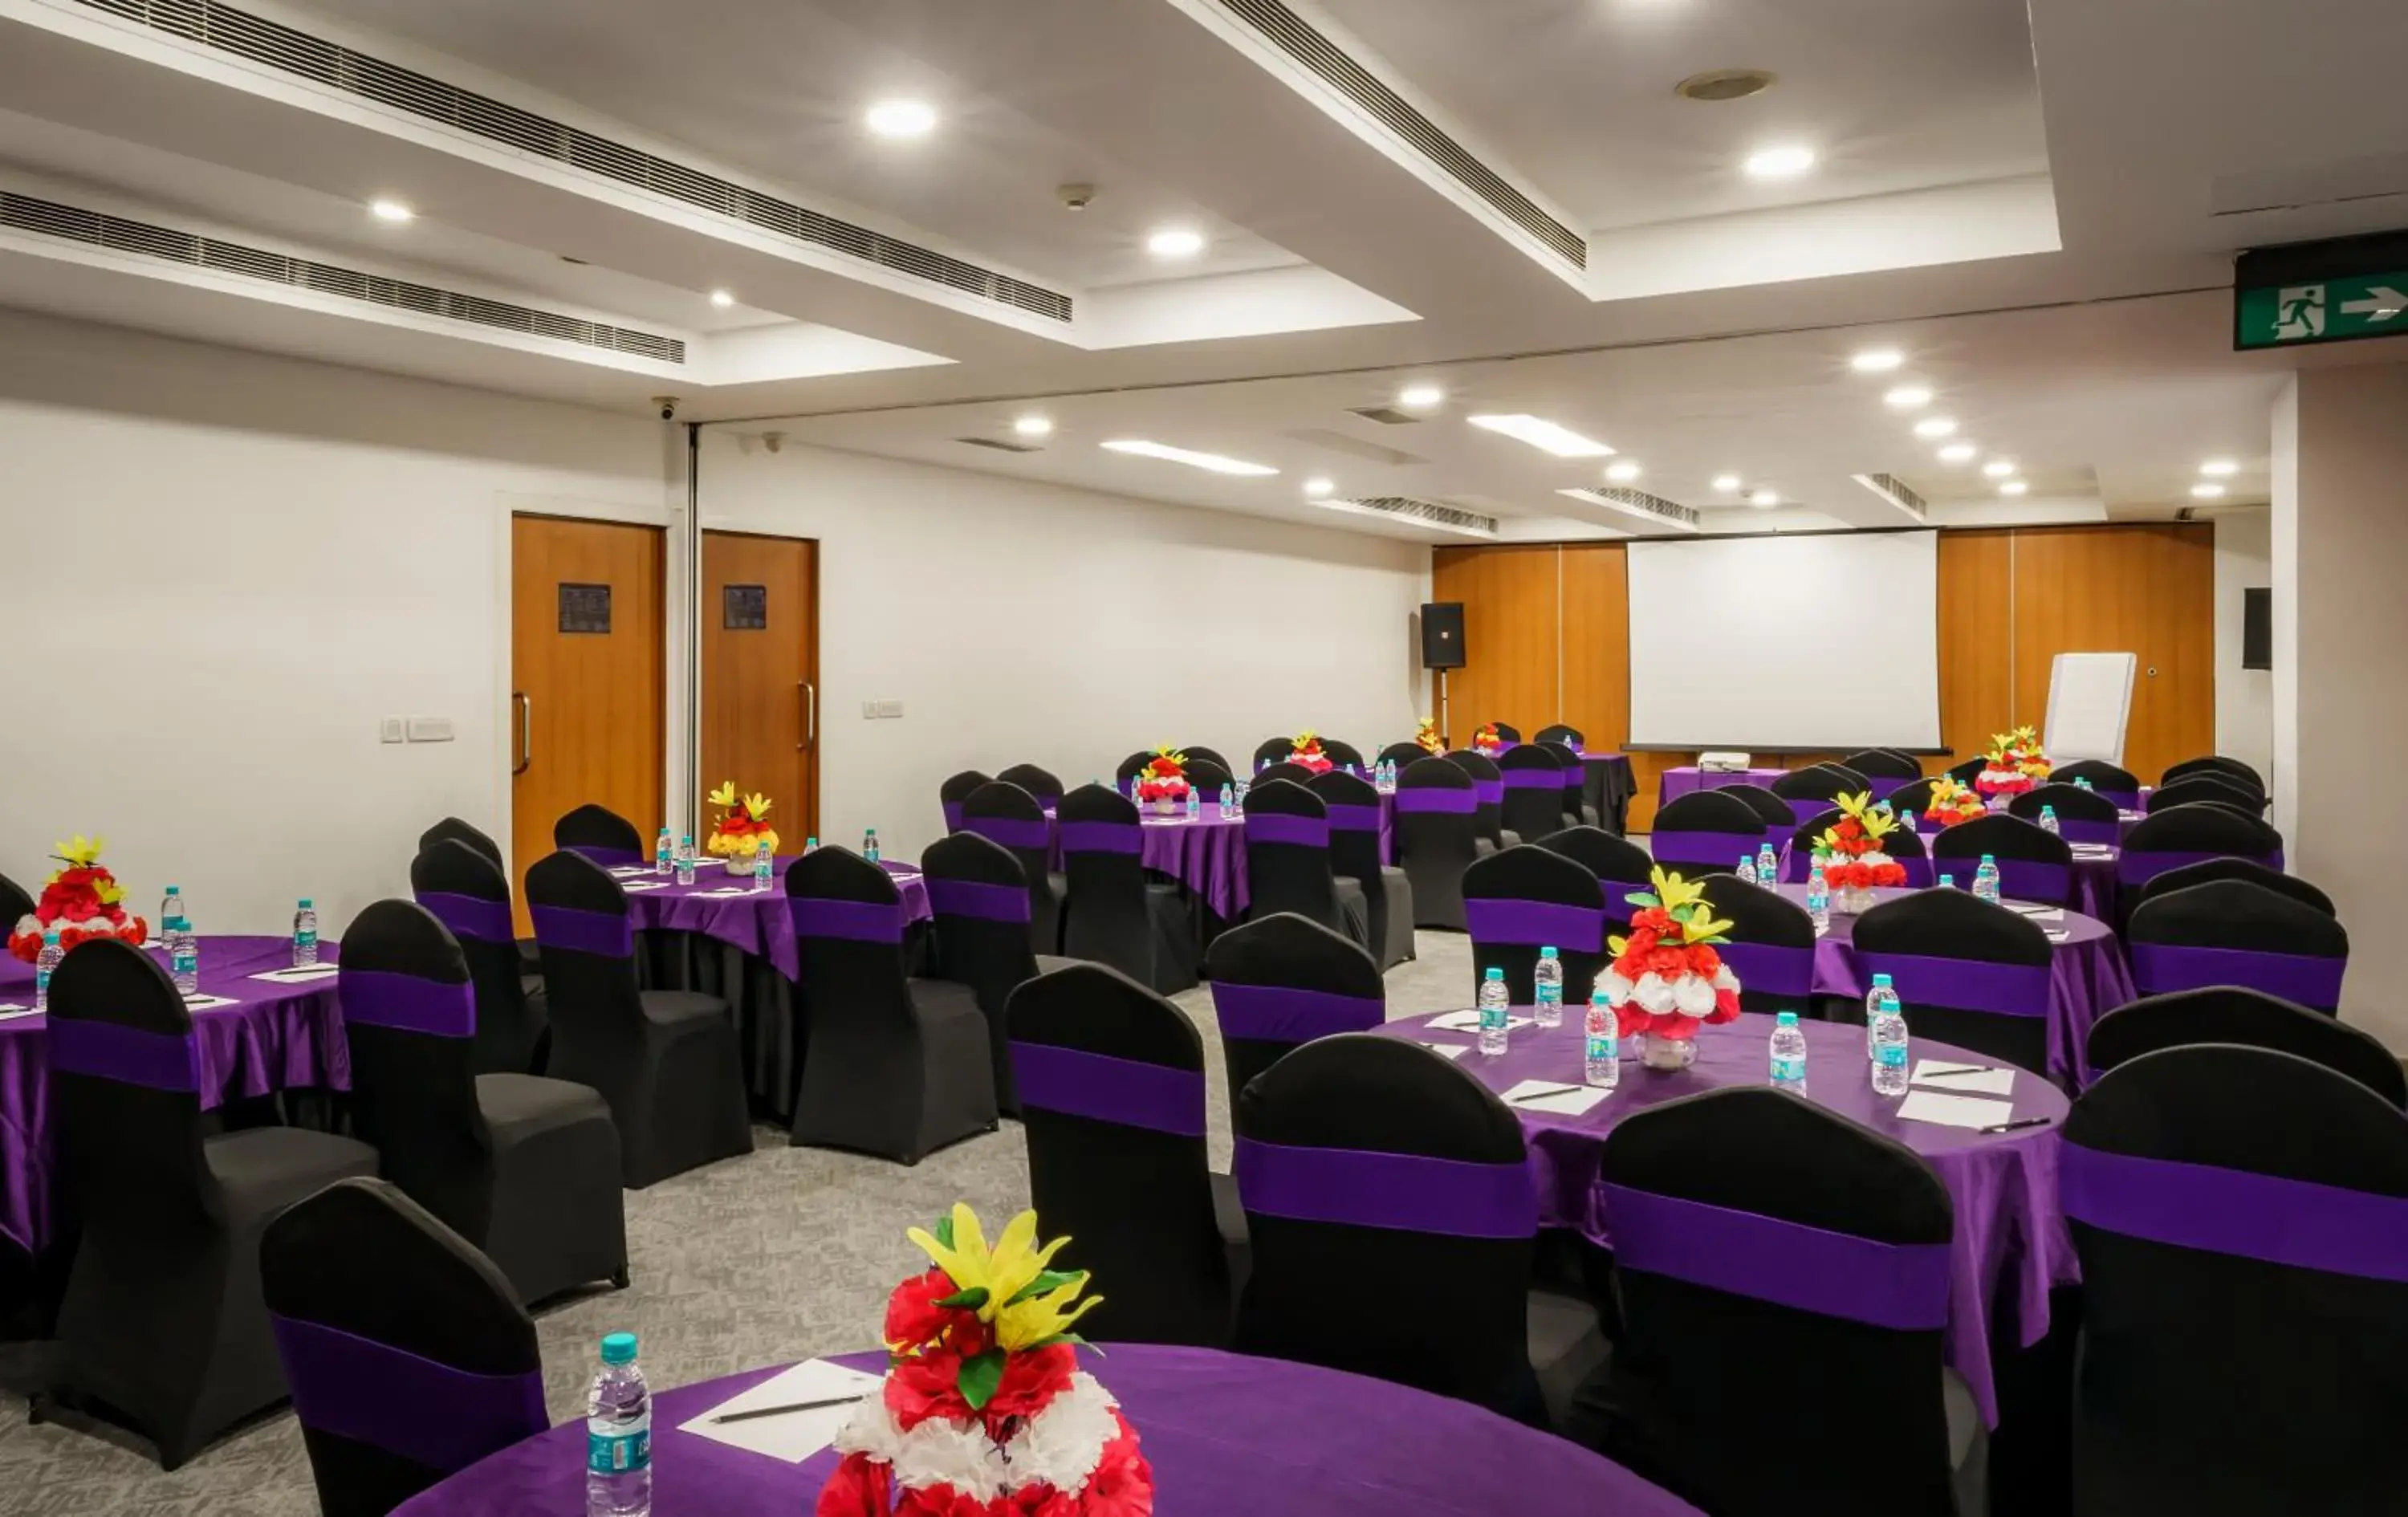 Meeting/conference room, Banquet Facilities in Caspia Hotel New Delhi